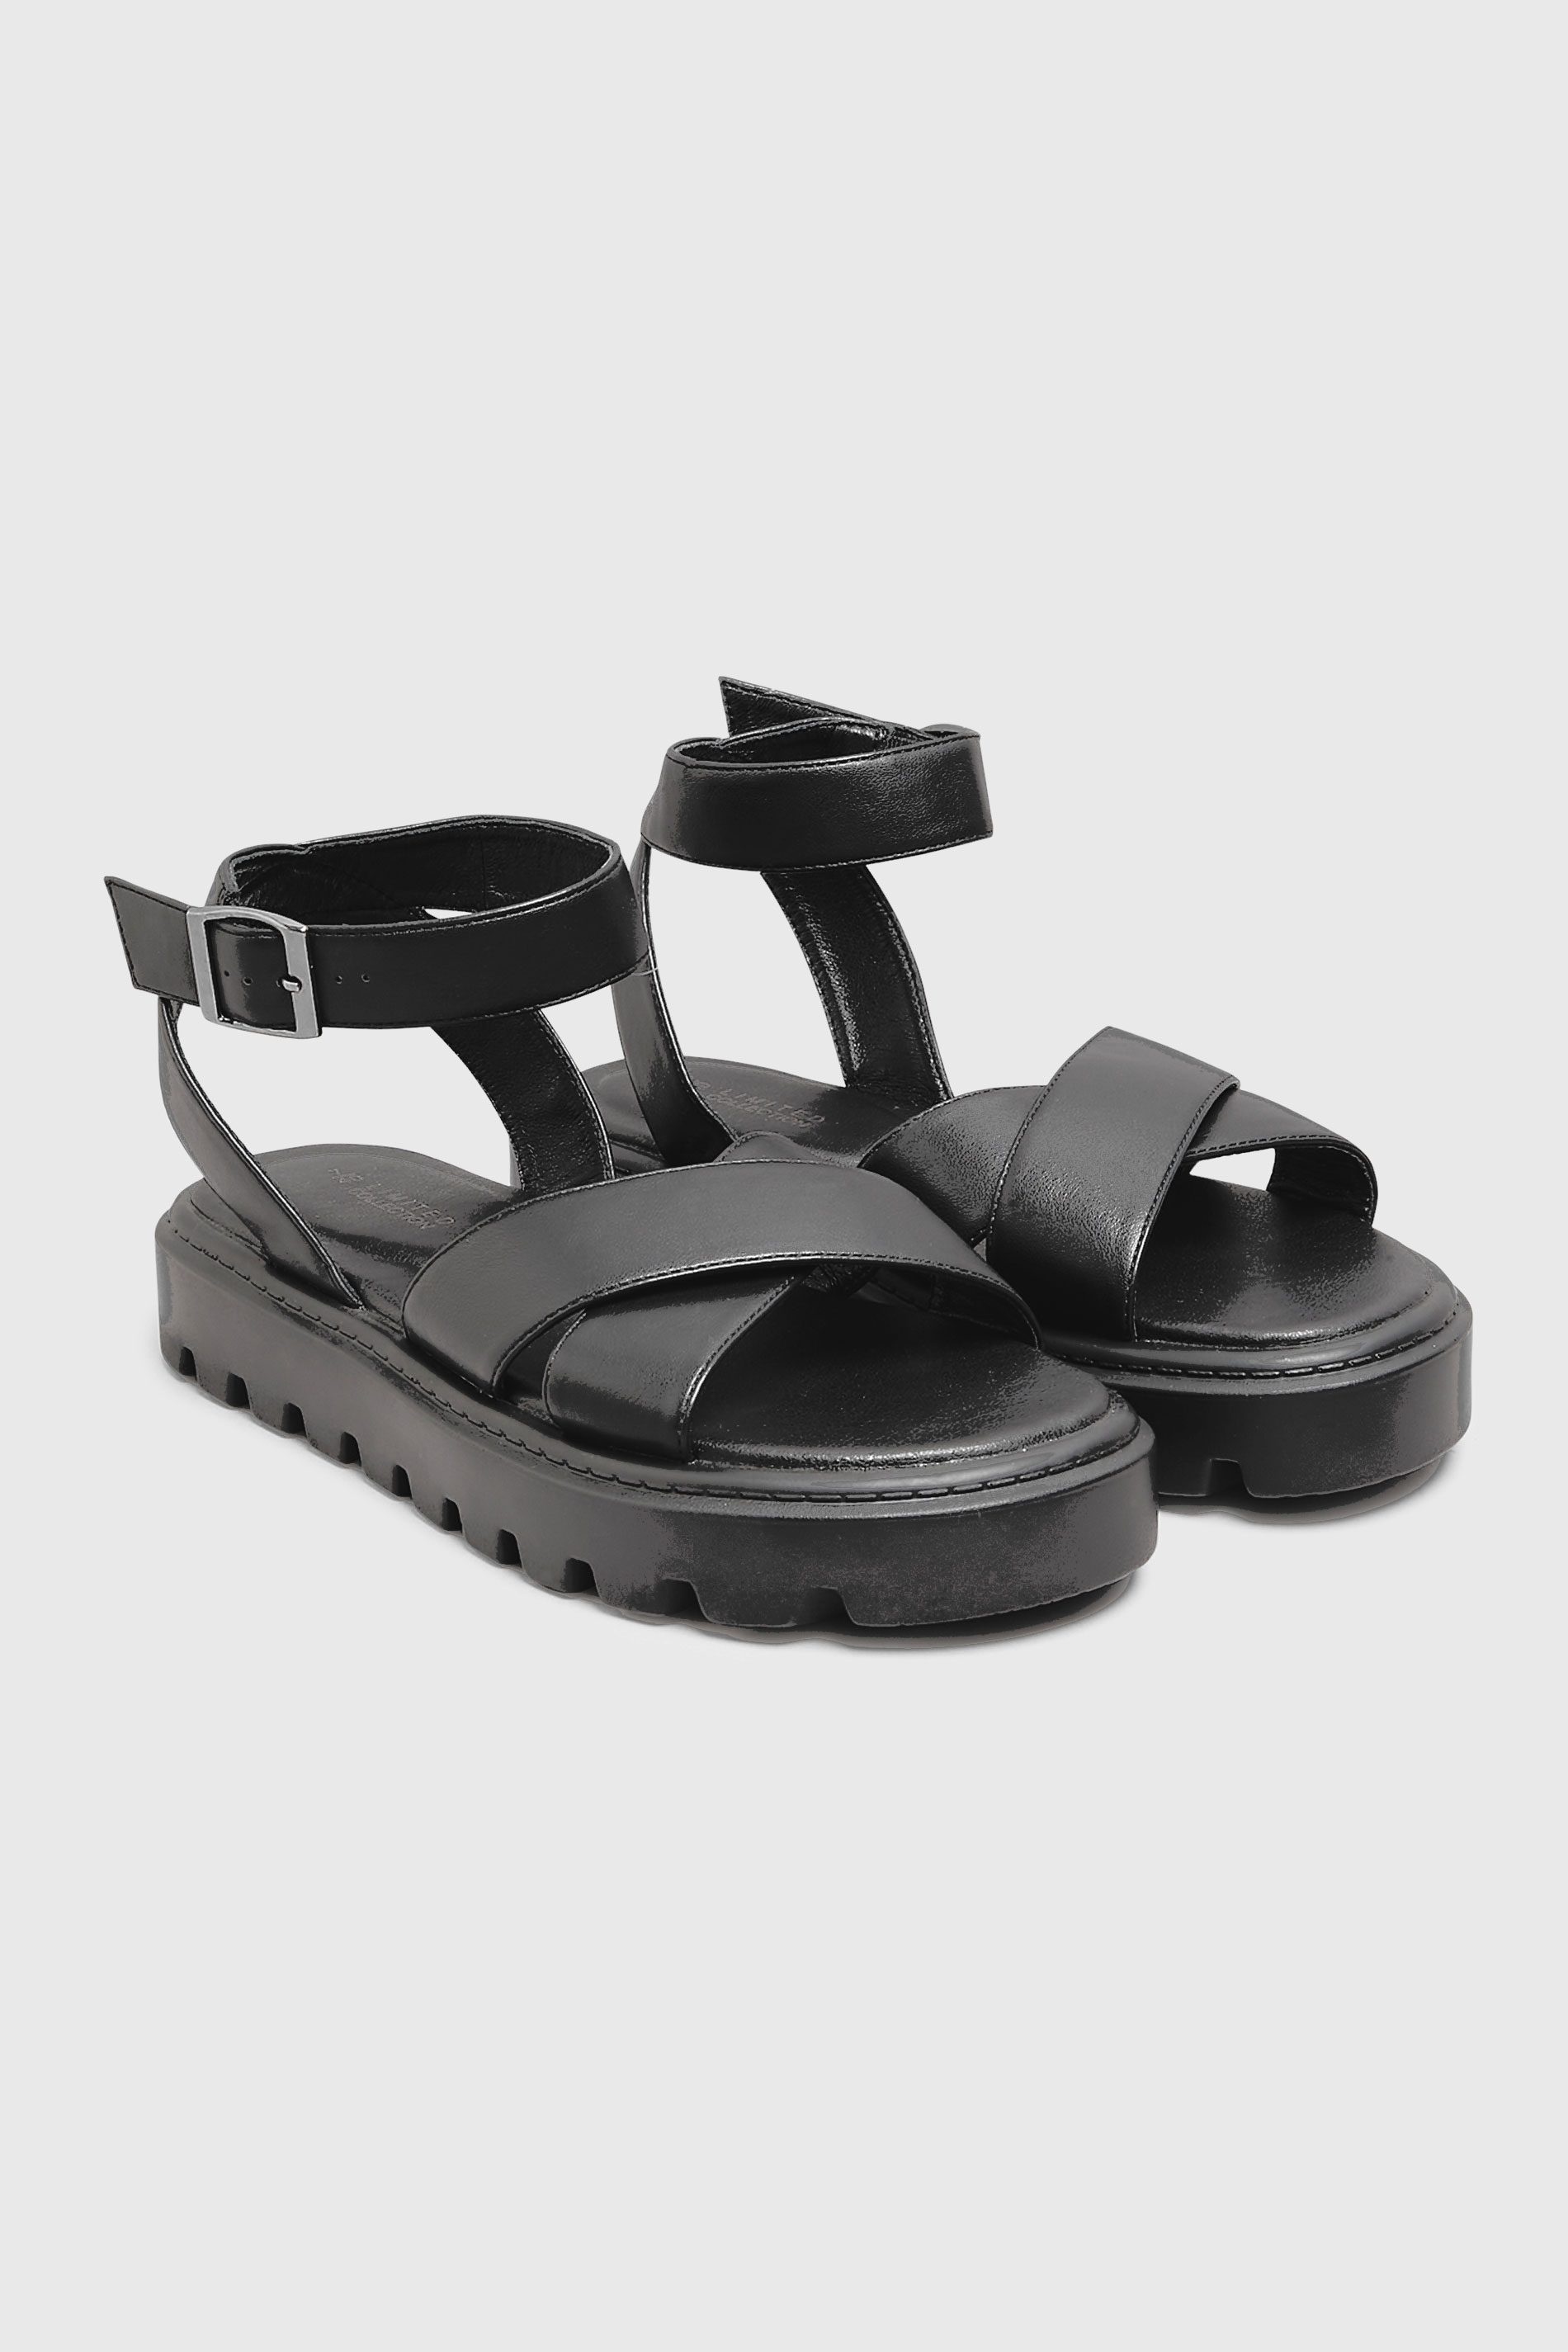 Chaussures Pieds Larges Sandales Pieds Larges | LIMITED COLLECTION - Sandales Plateformes Noires Croisées Pieds Extra Larges EEE - PE17577